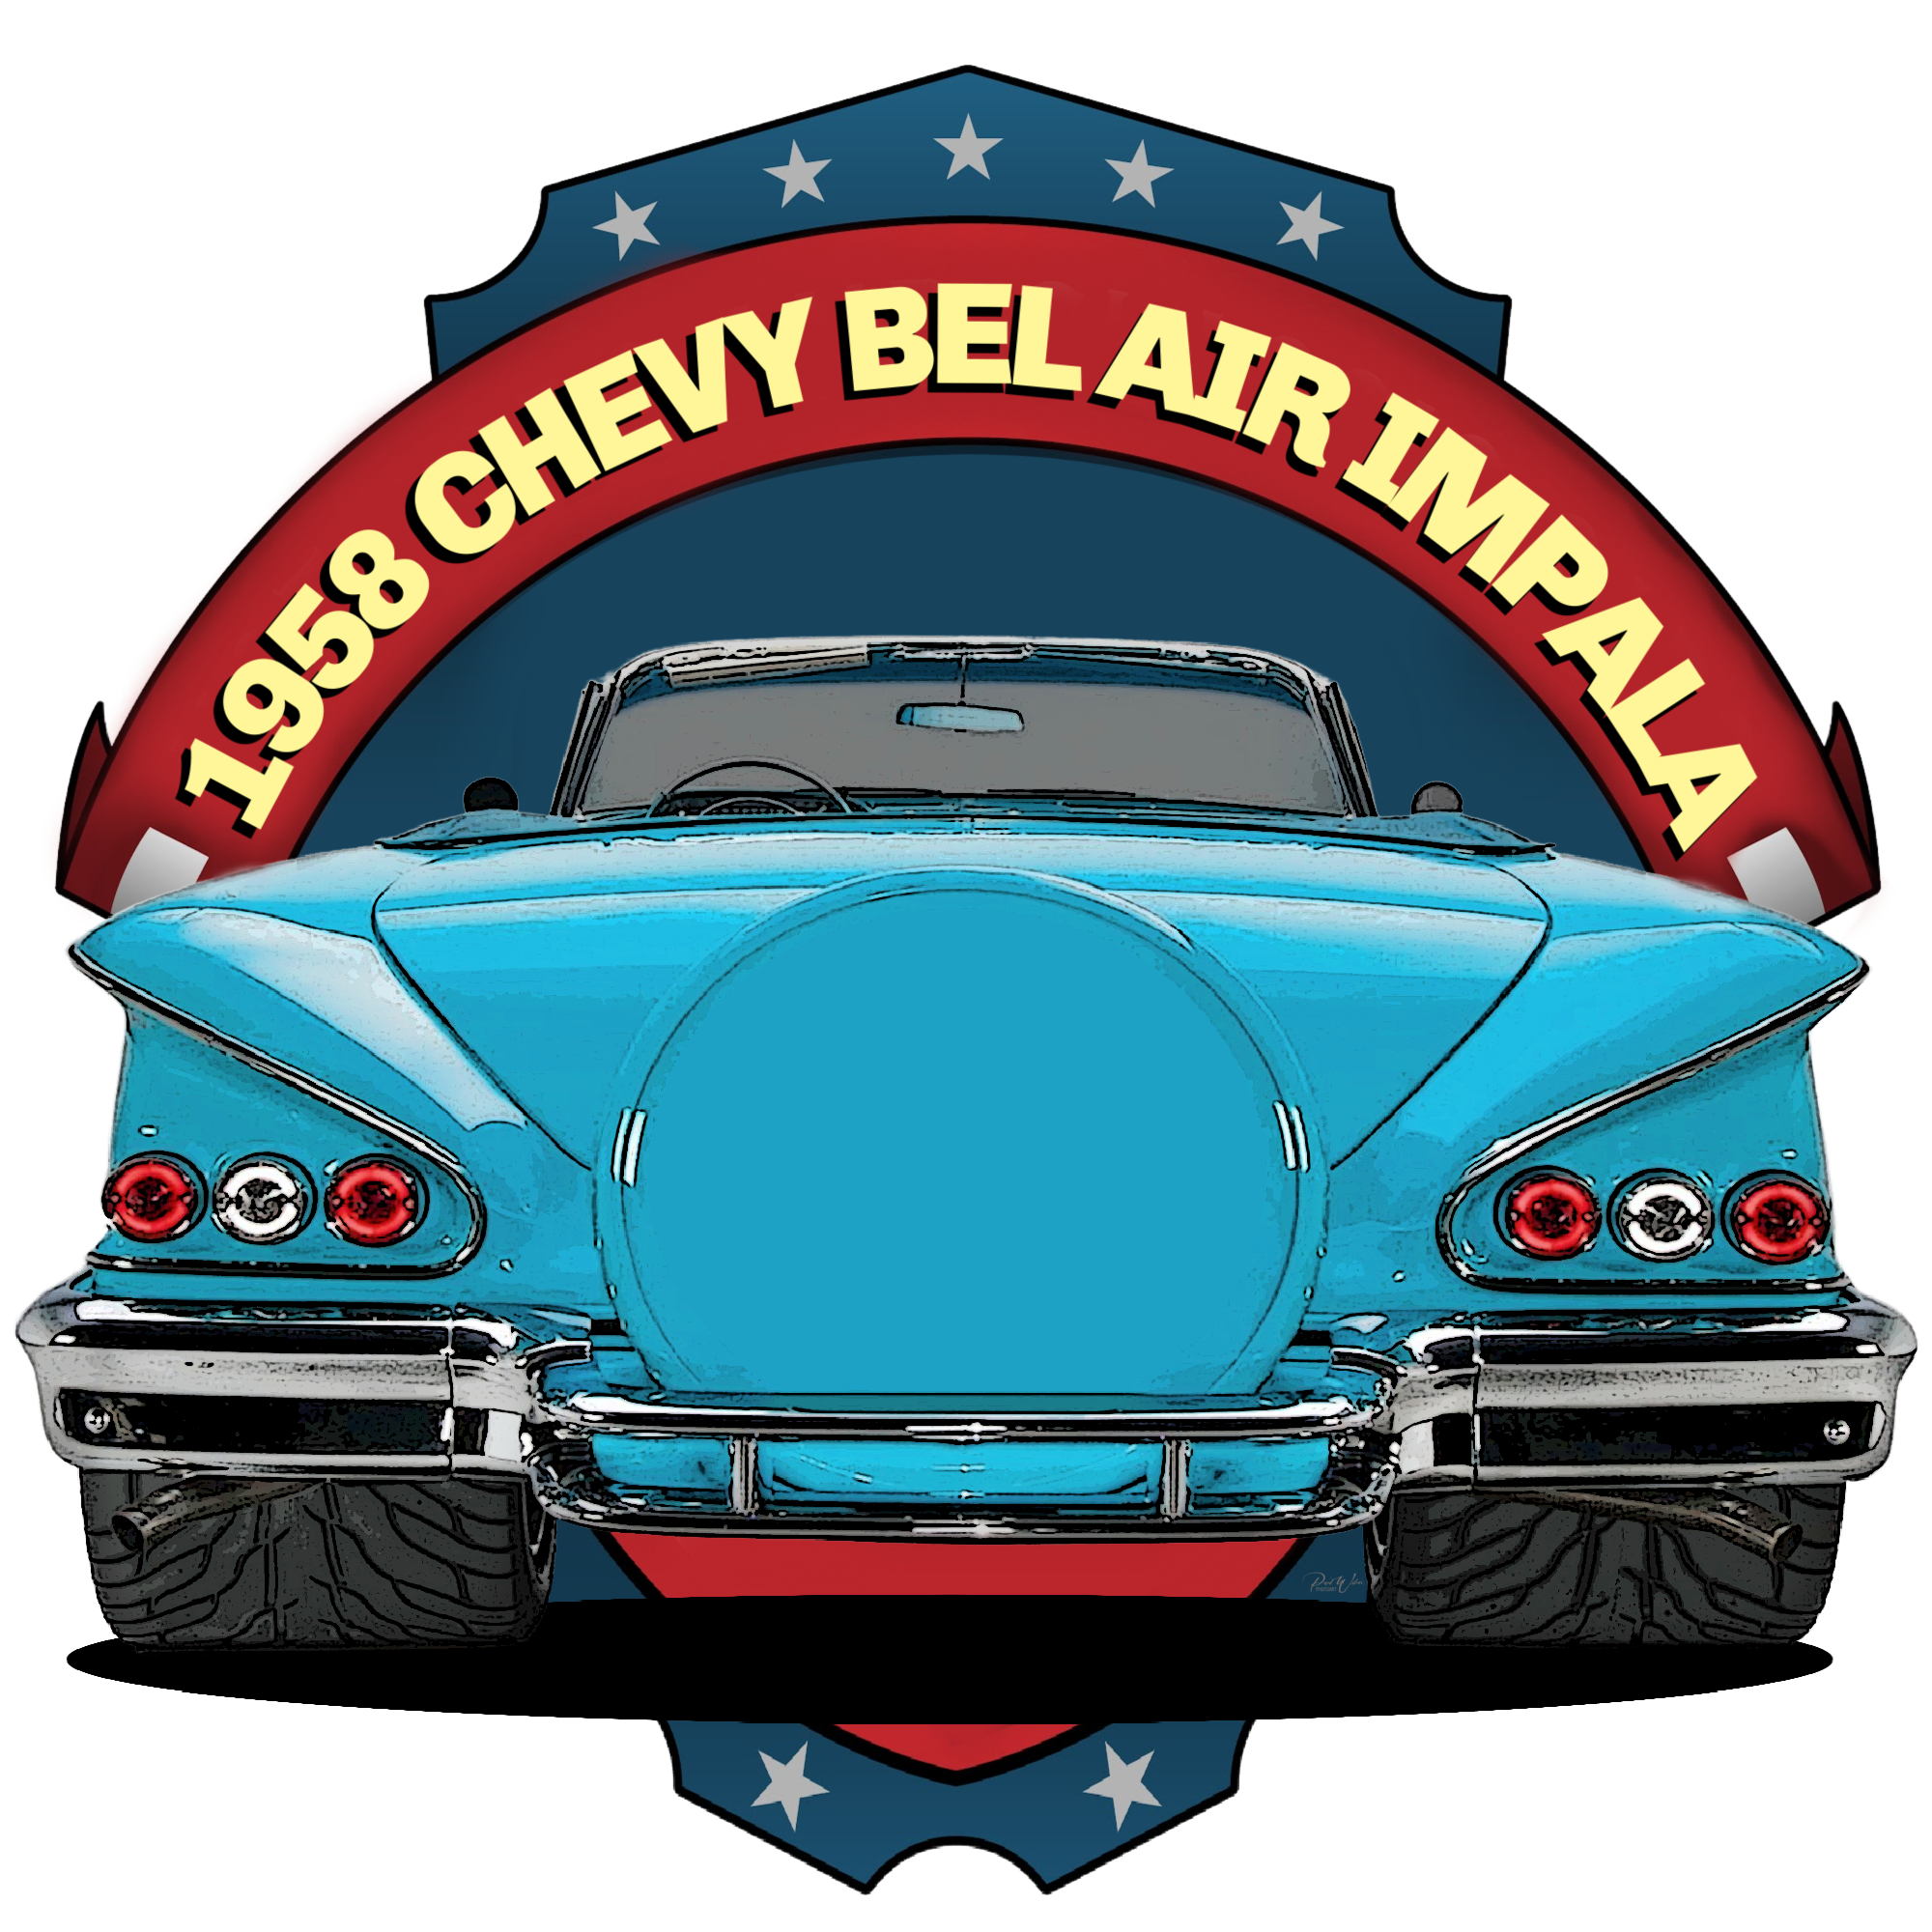 1958 Chevy Bel Air Impala - Image